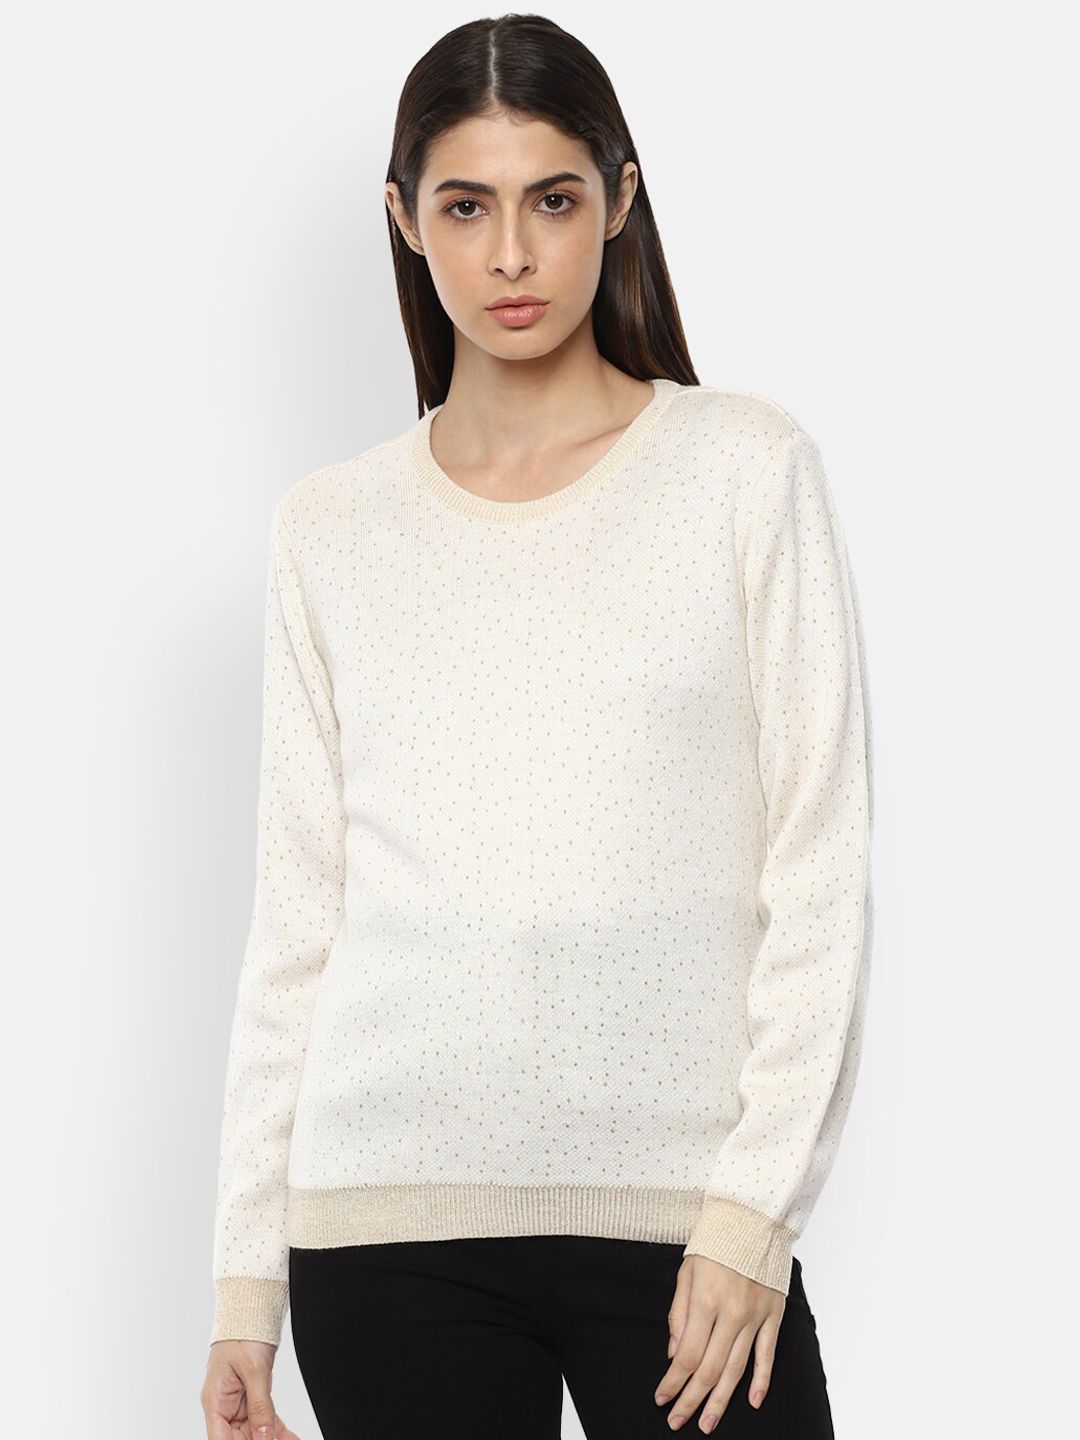 Van Heusen Woman Women Cream-Coloured & Beige Printed Pullover Sweater Price in India